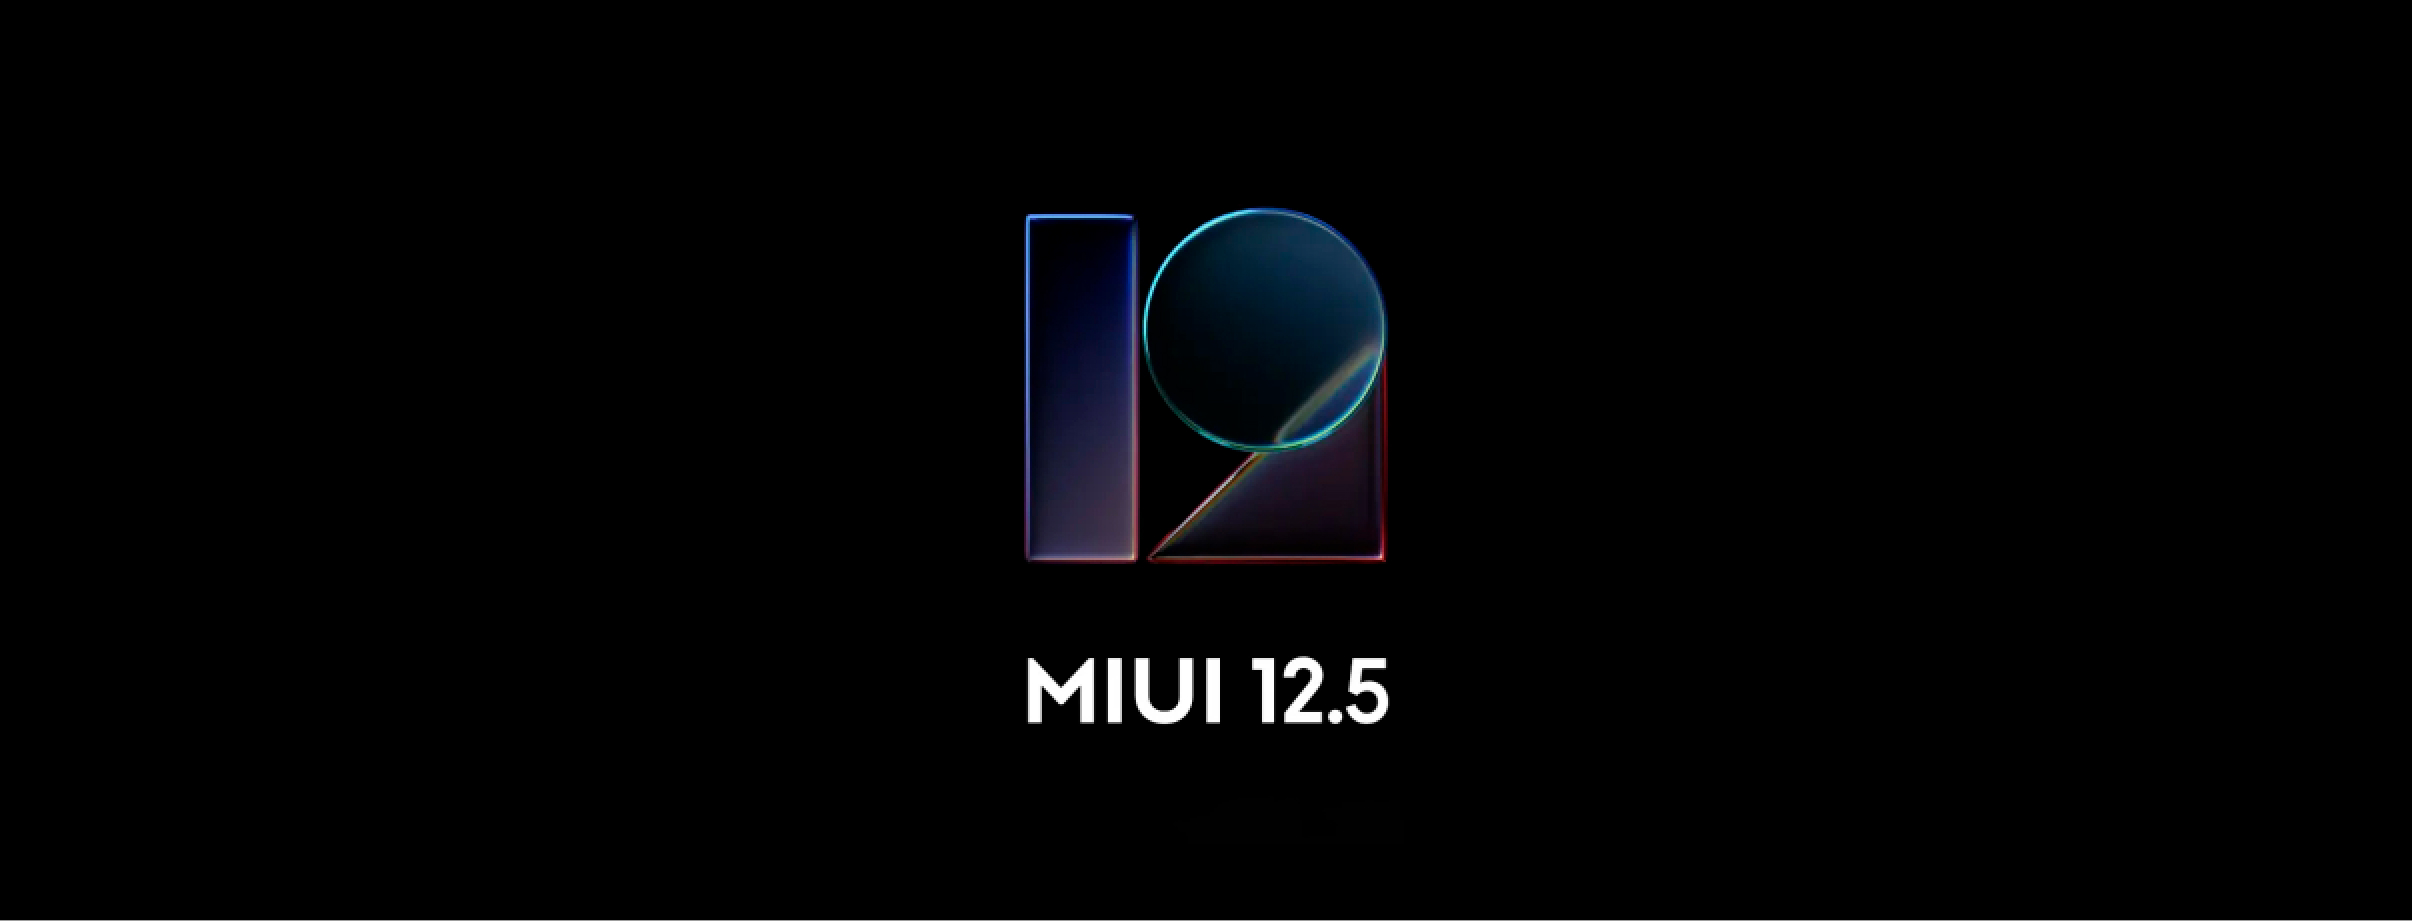 Версии miui 12. Лого MIUI 12. MIUI 12.5. Лого MIUI 12.5. MIUI 13 логотип.